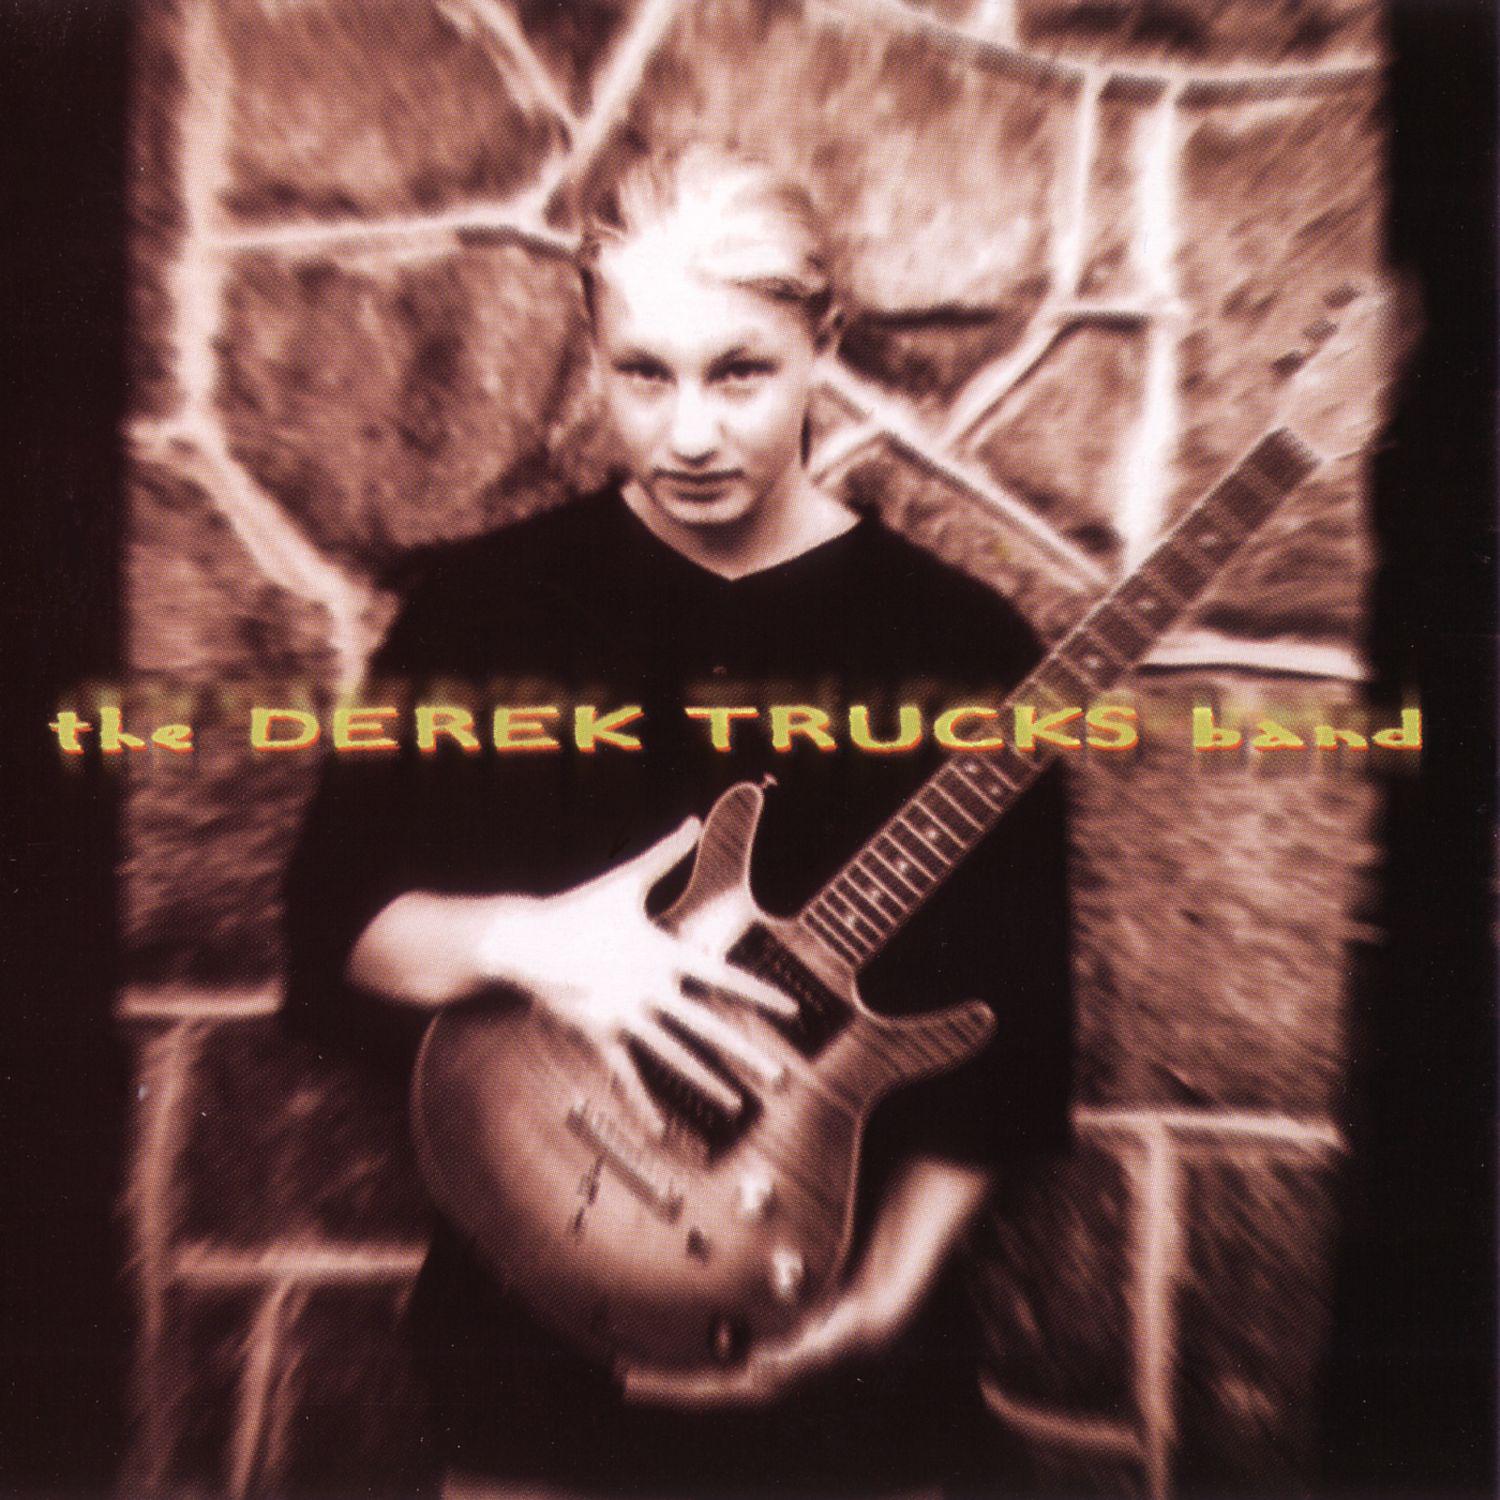 The Derek Trucks Band - So What